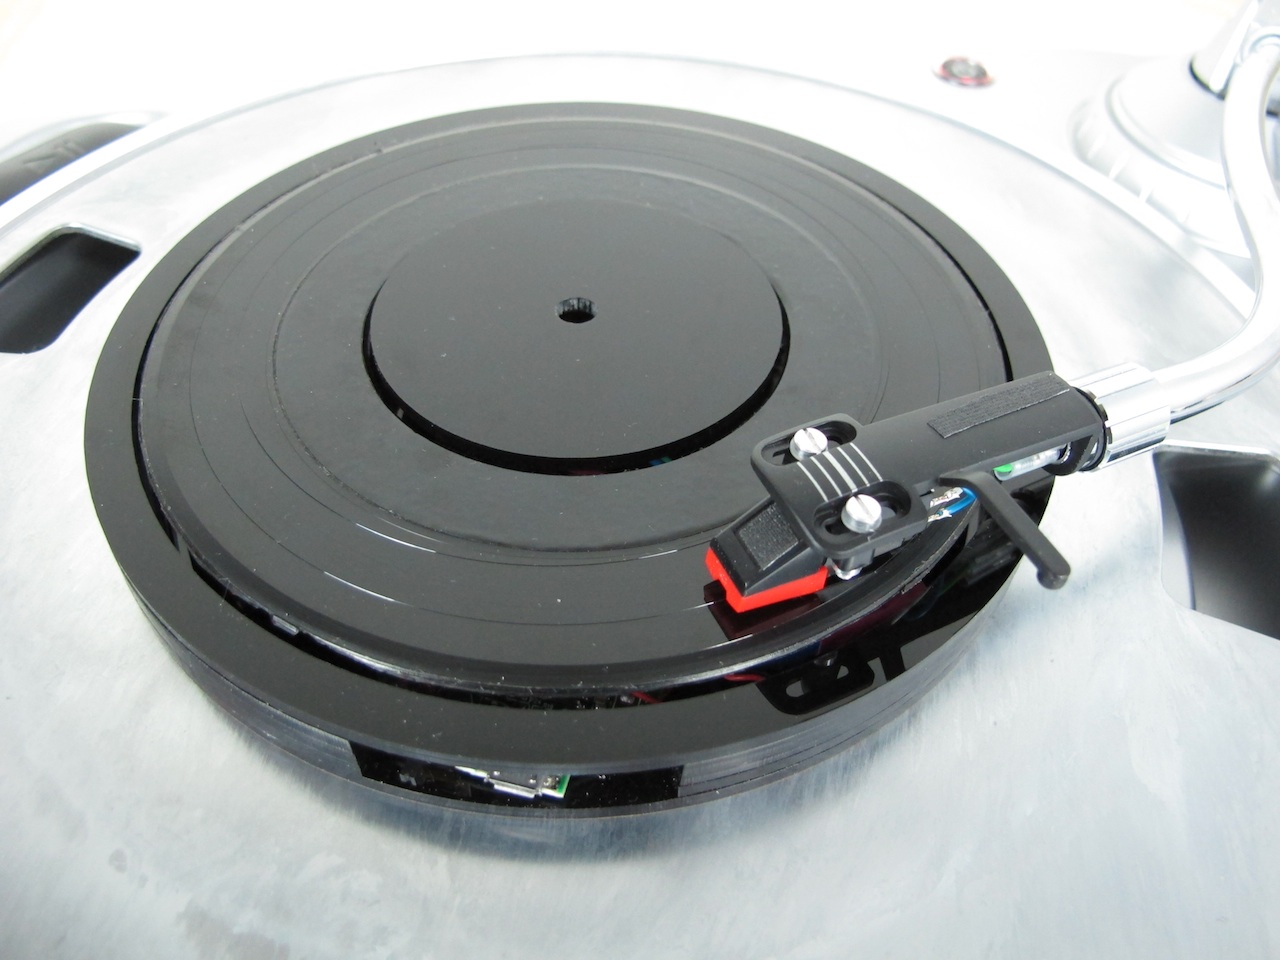 Le disque vinyl universel en Bluetooth